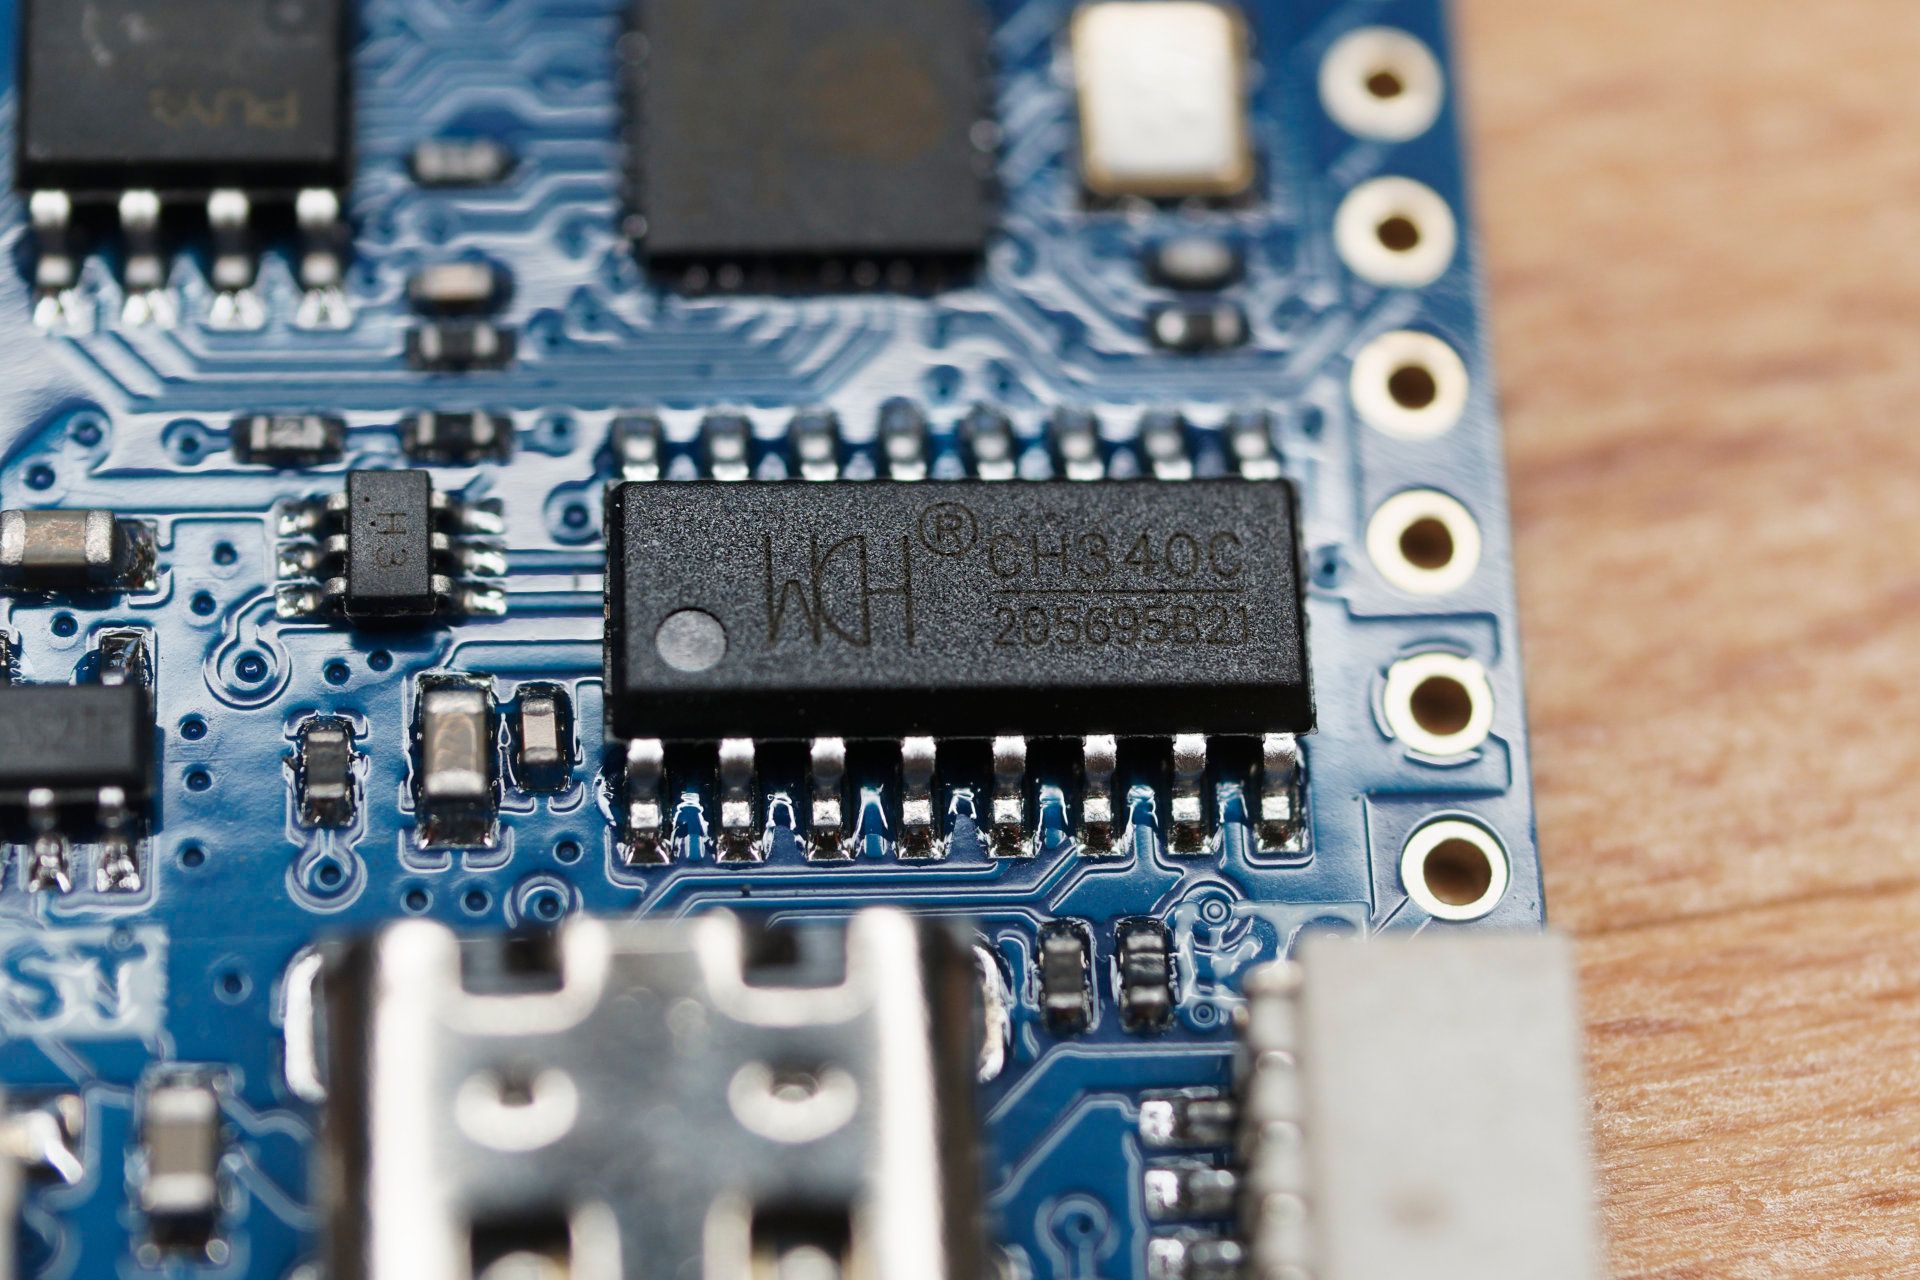 CH340C Serial Chip on Lolin D1 mini Development Board